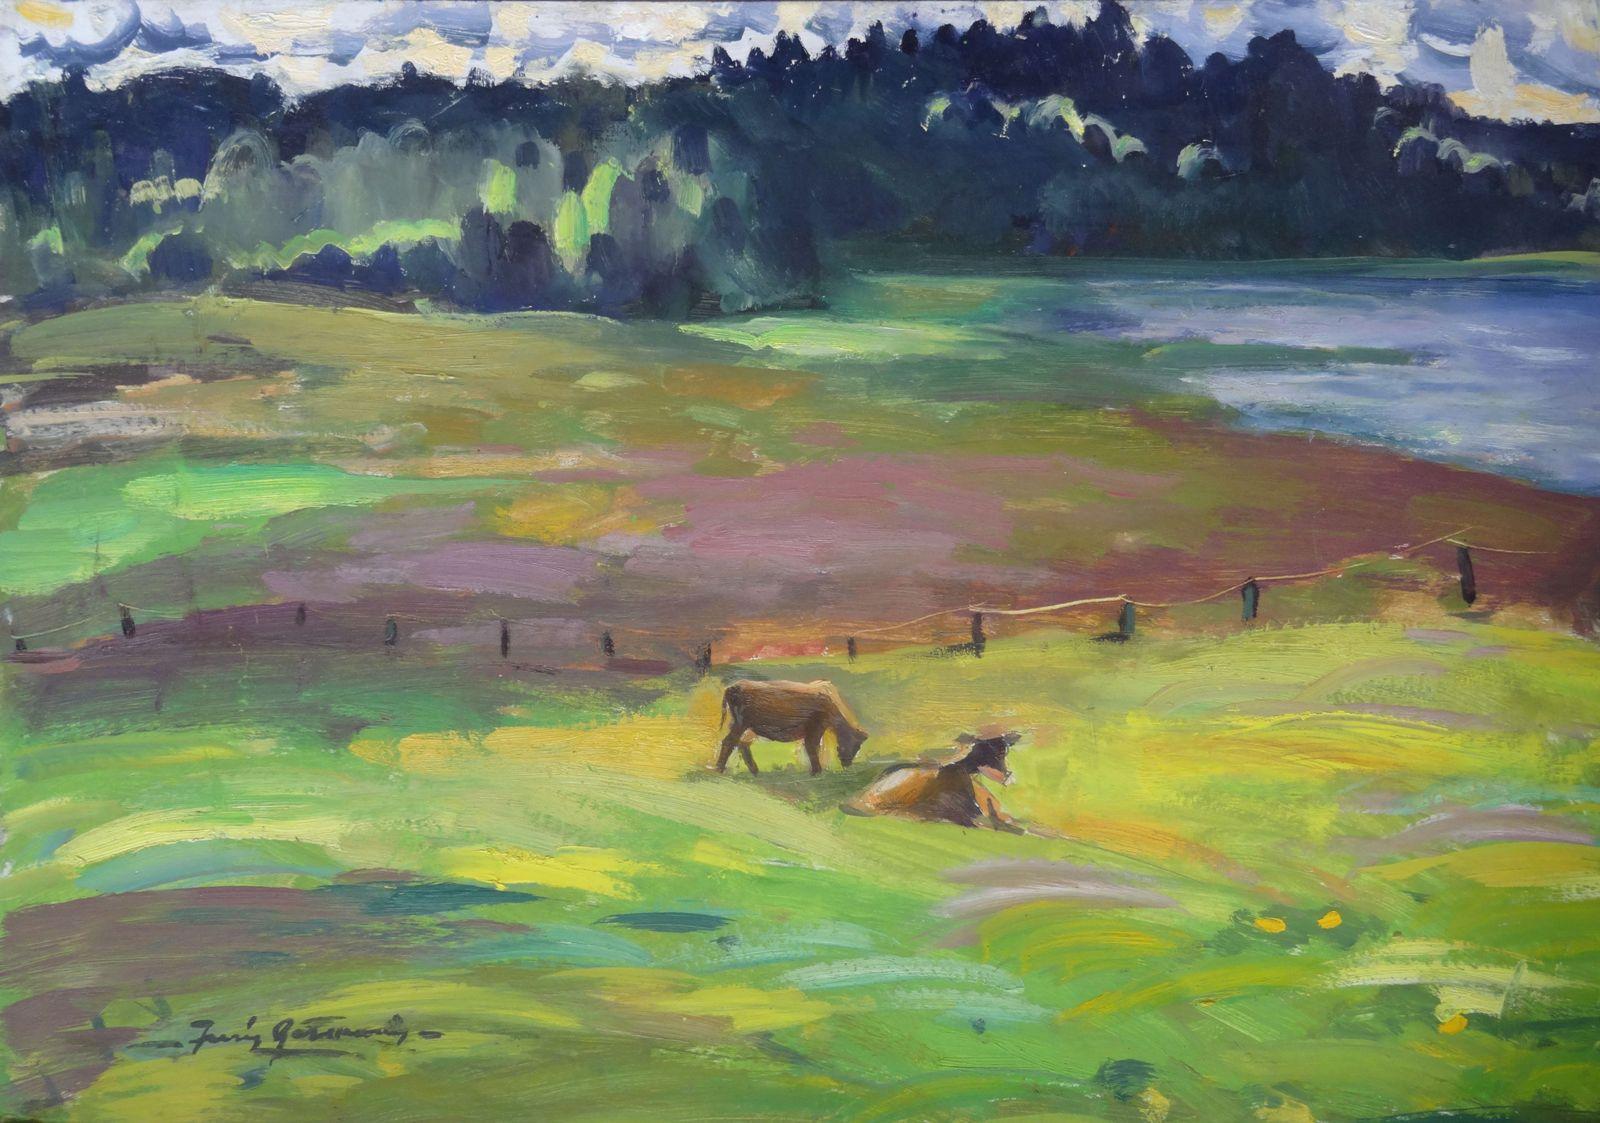 Juris Germanis Landscape Painting - In the field. Oil on cardboard, 57x81 cm